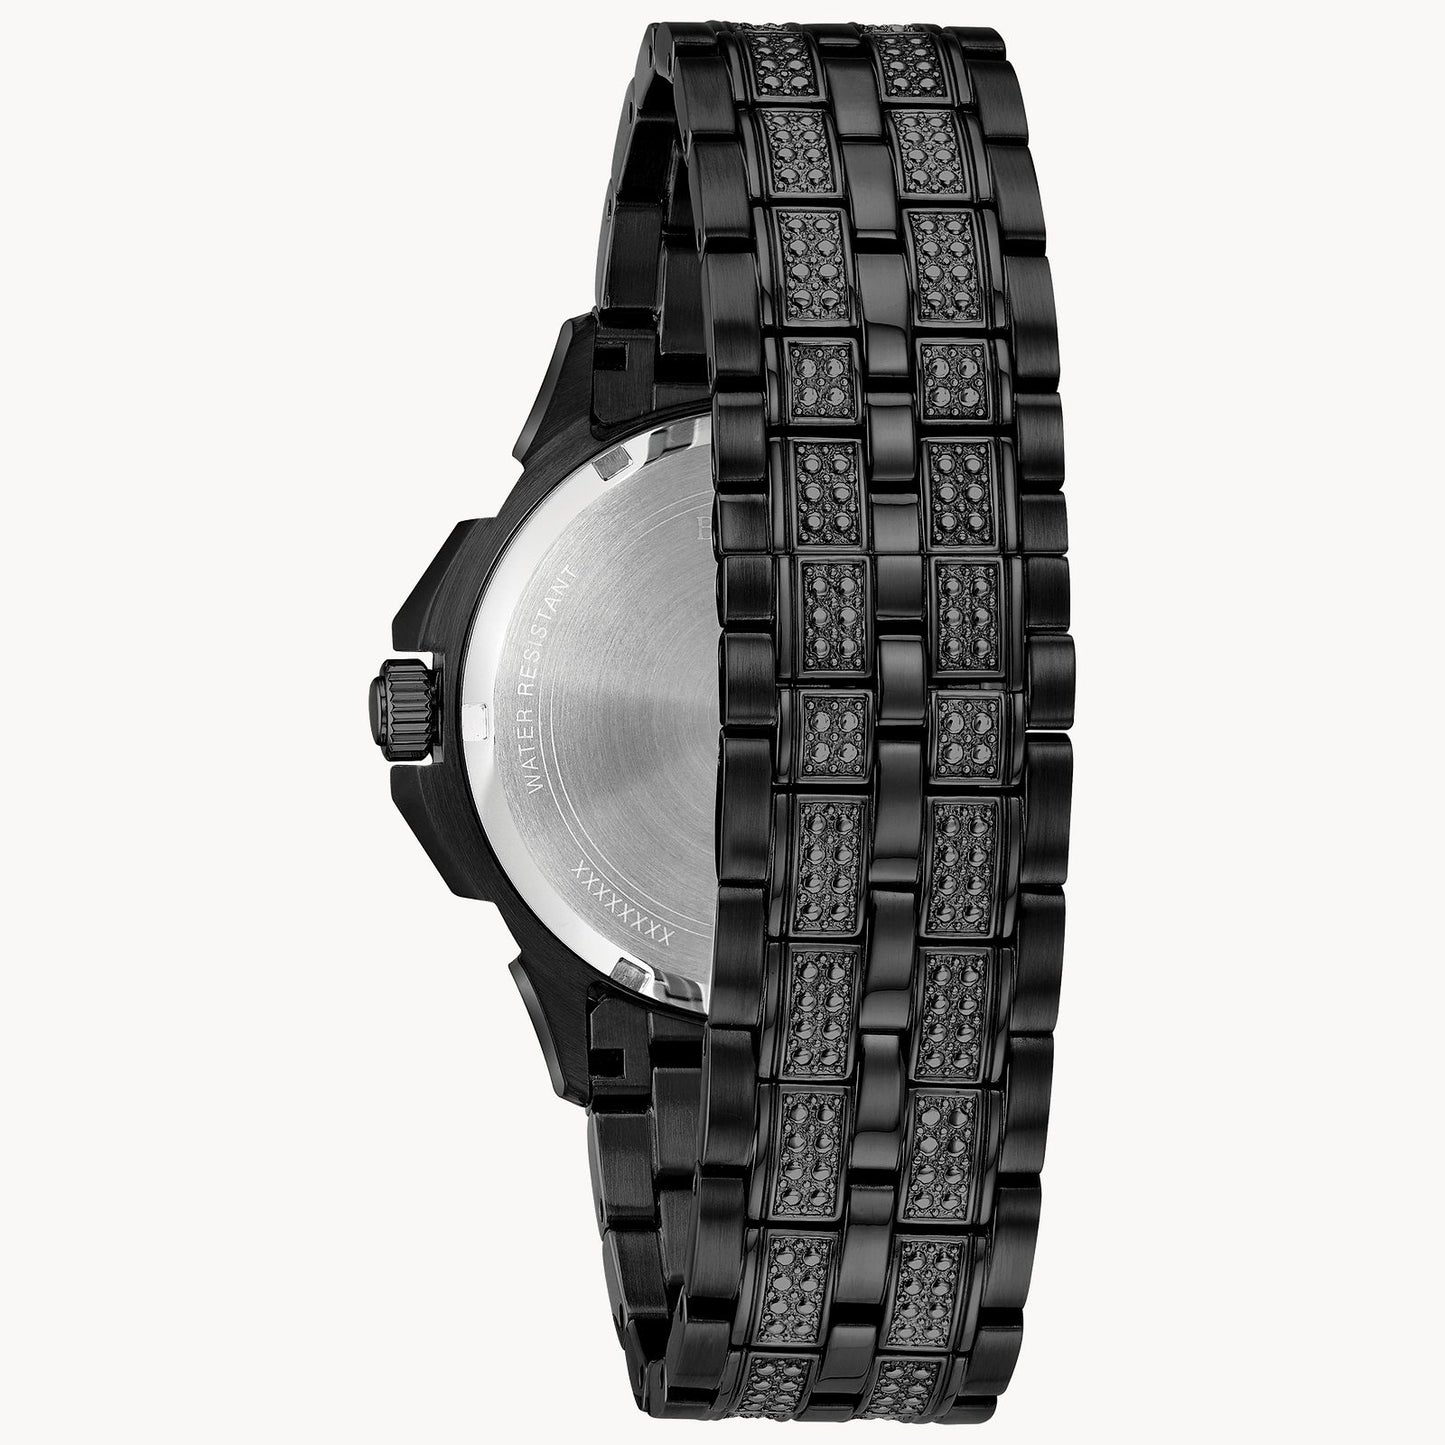 Bulova Octava Black Crystal Accent Chronograph Watch